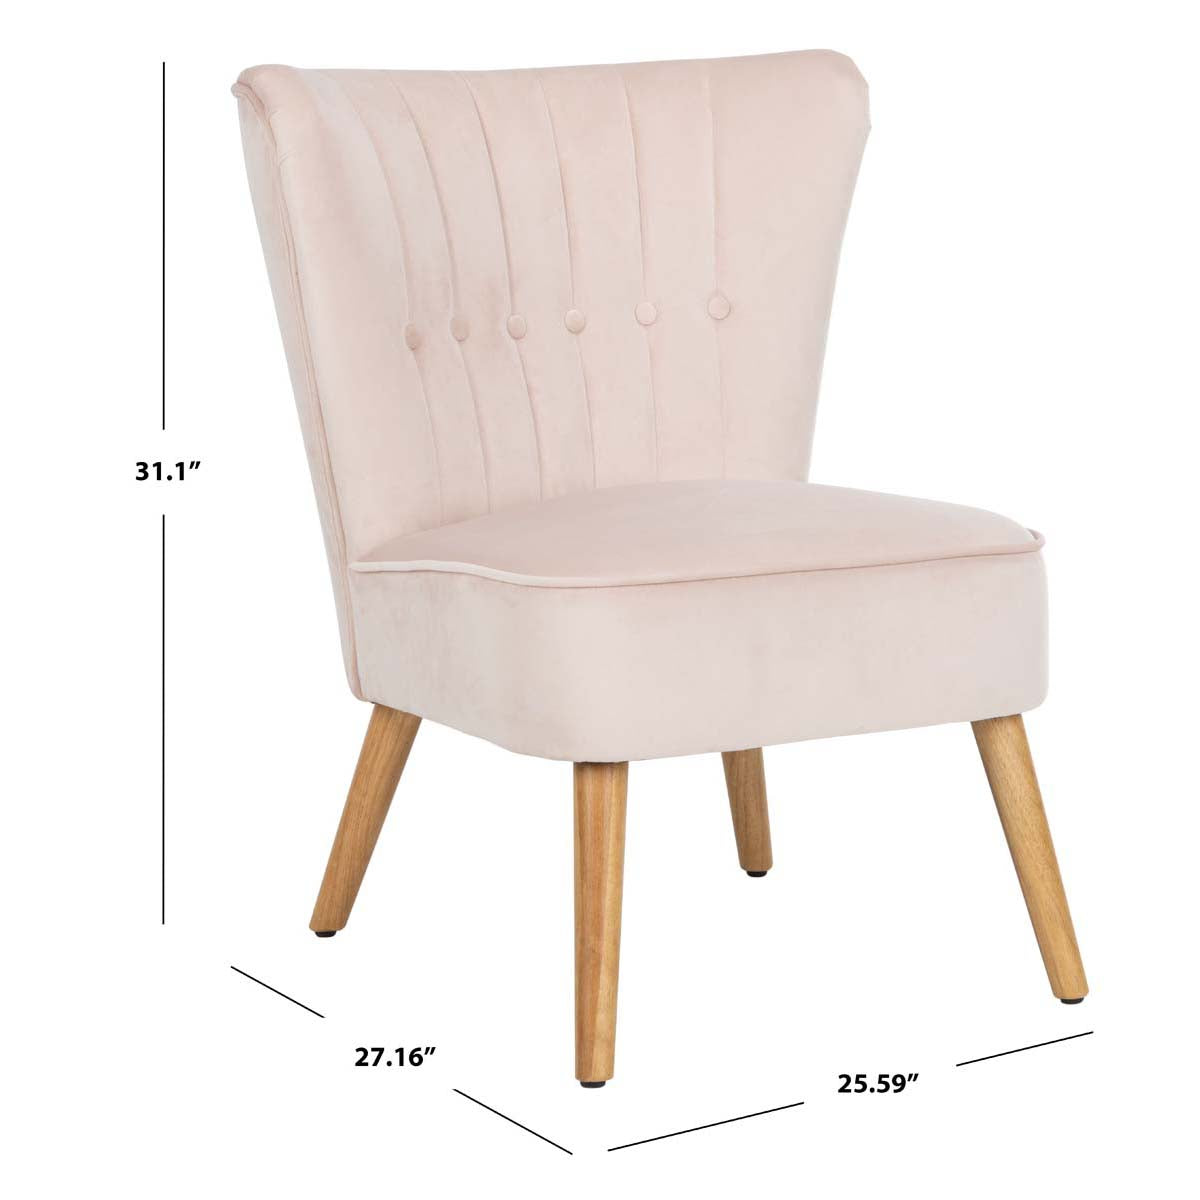 Safavieh June Mid Century Accent Chair , ACH4500 - Blush Pink/Natural